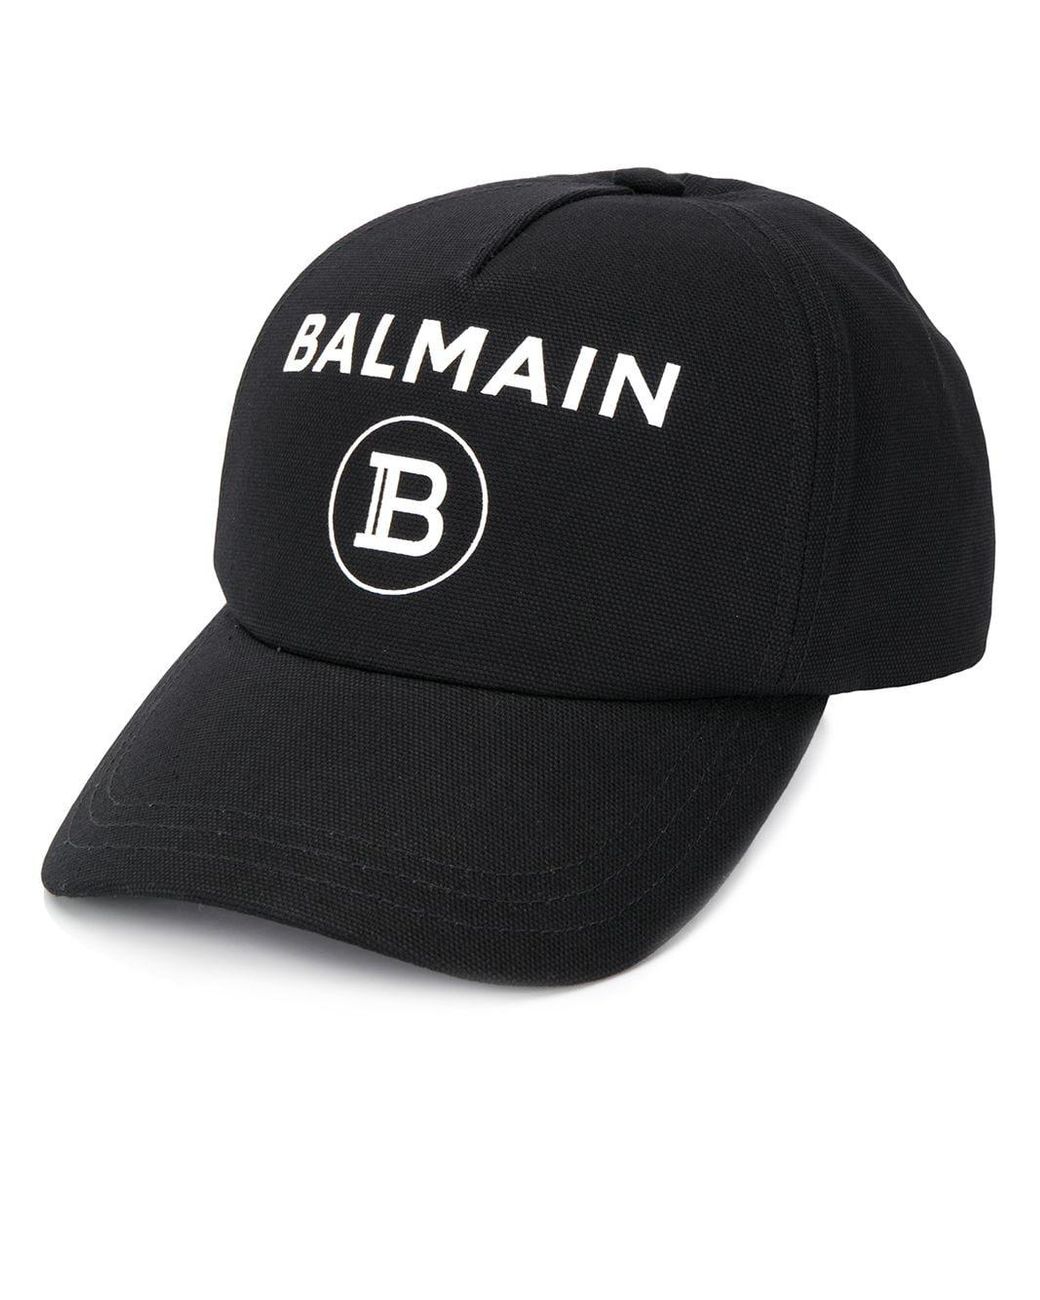 Balmain Logo Cotton Canvas Baseball Cap in Black for Men - Save 60% - Lyst